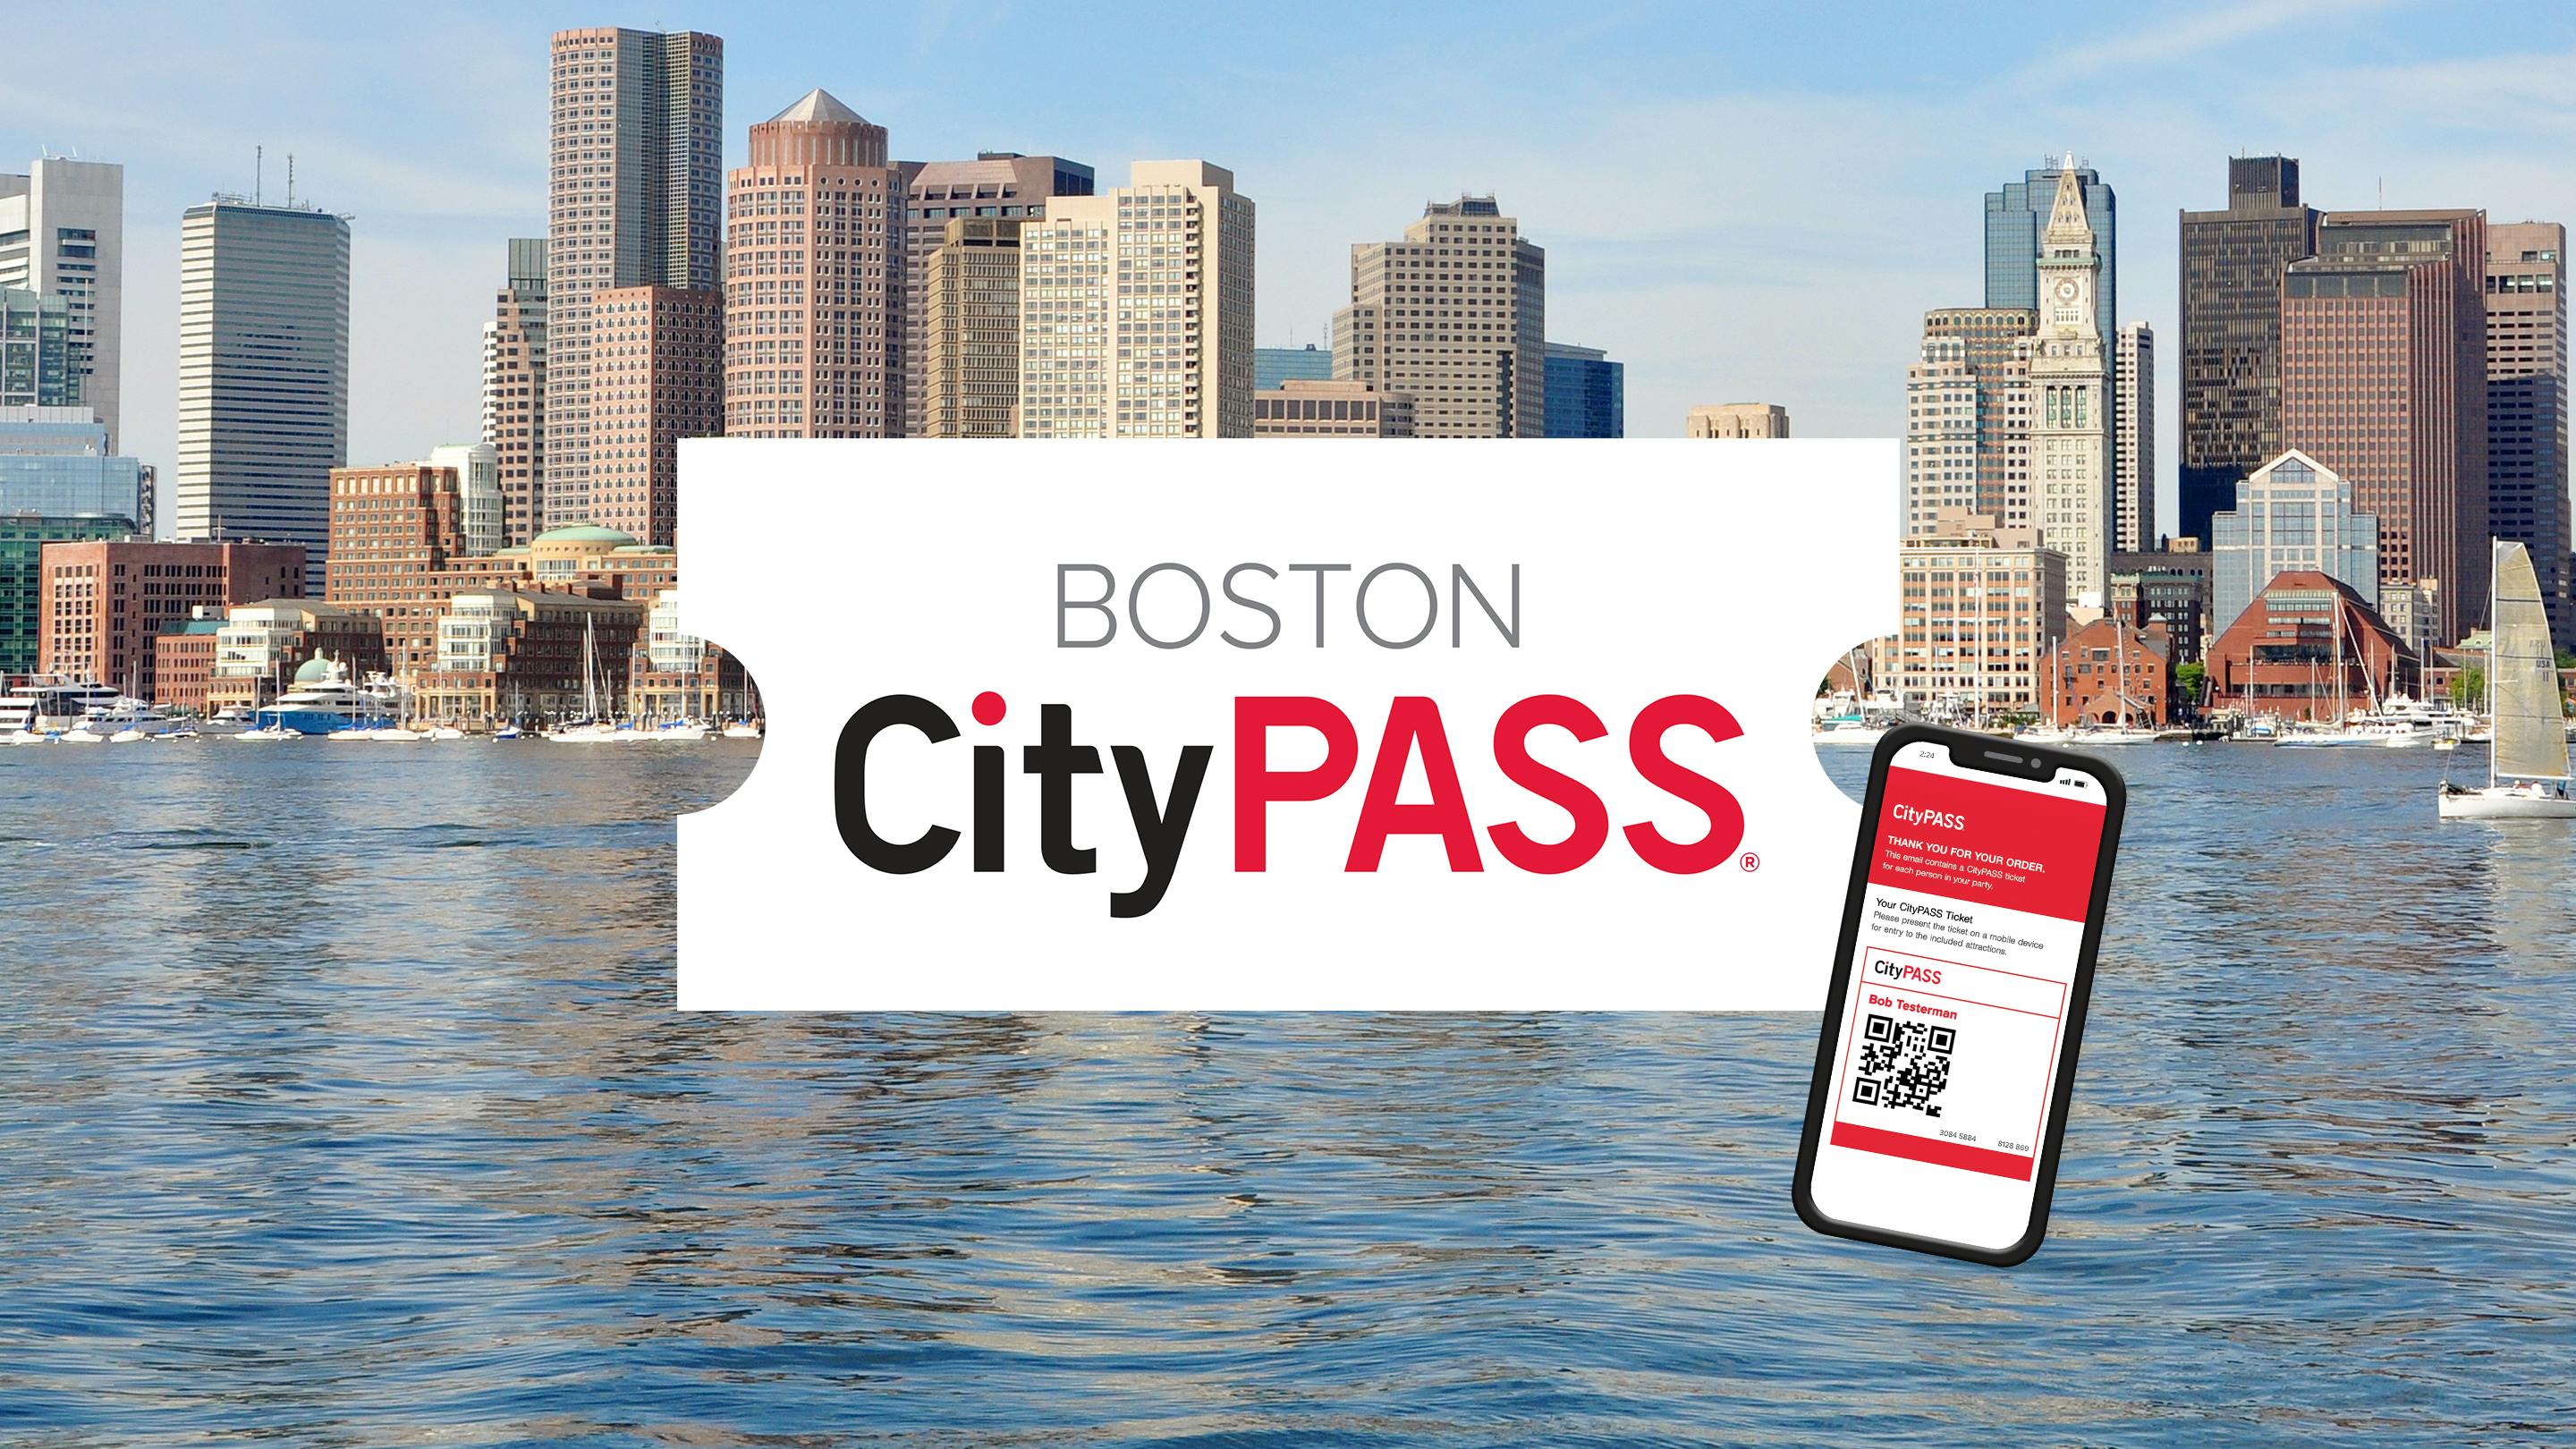 Boston CityPASS Mobile Ticket Musement